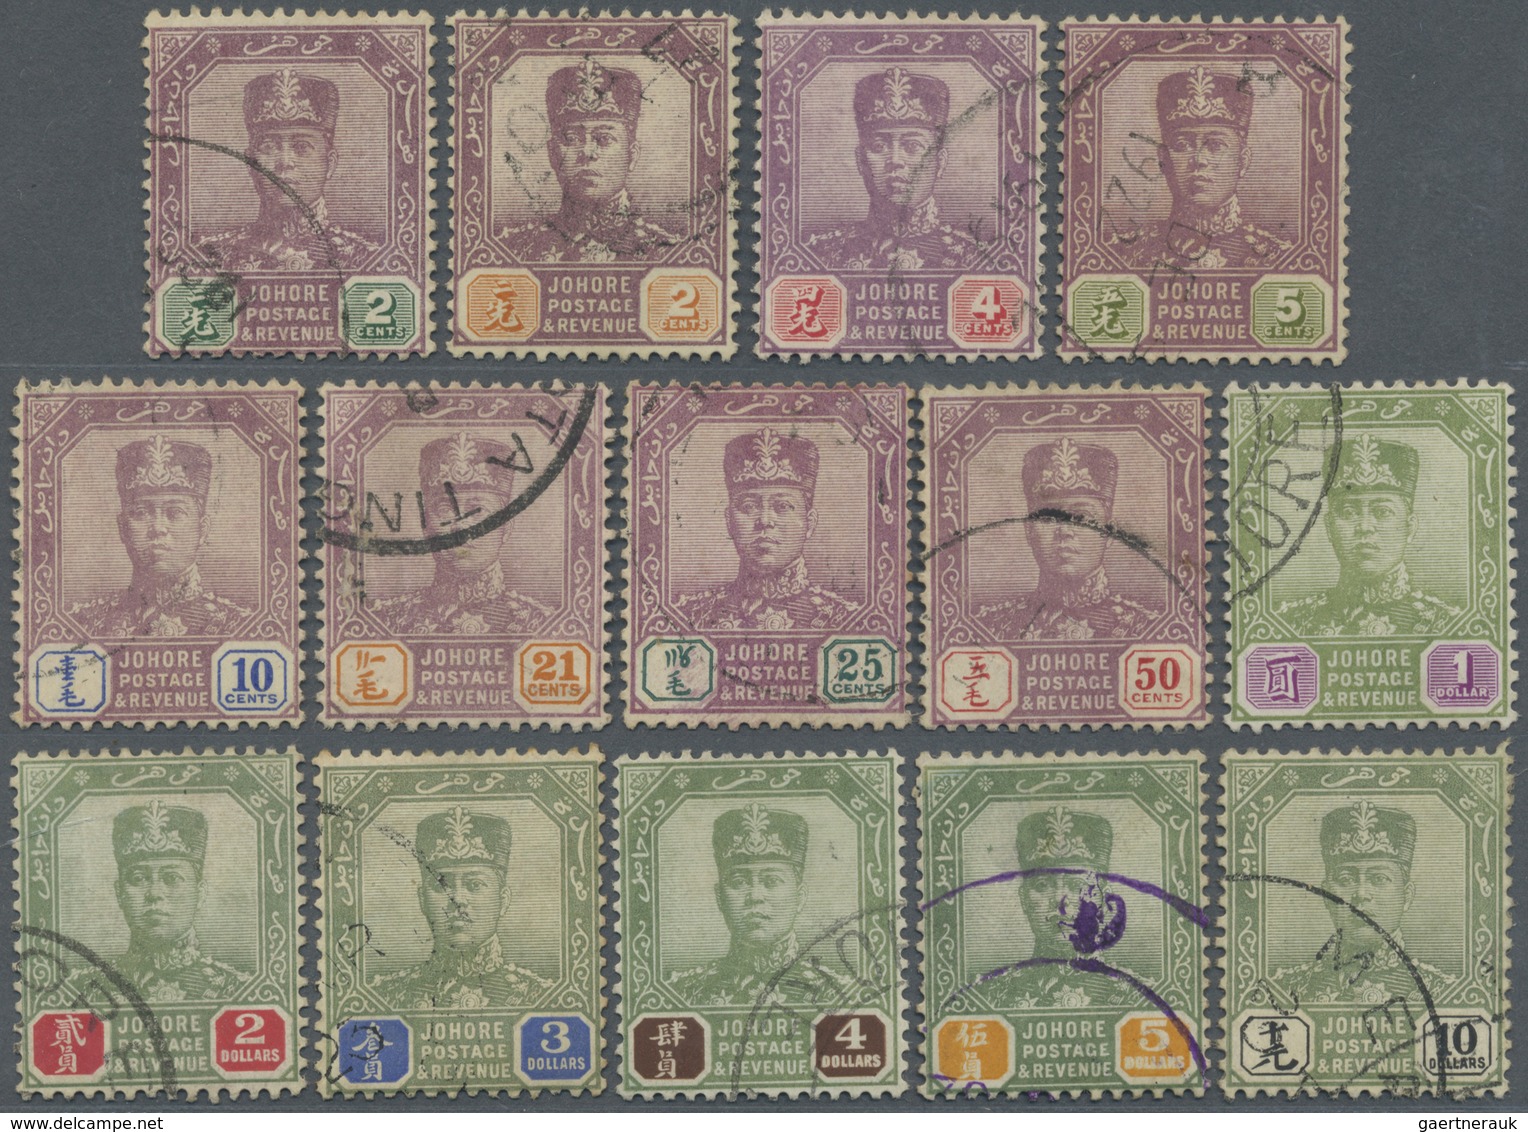 O Malaiische Staaten - Johor: 1918/1920, Sultan Sir Ibrahim Definitives With New Wmk. Mult. Crown CA C - Johore